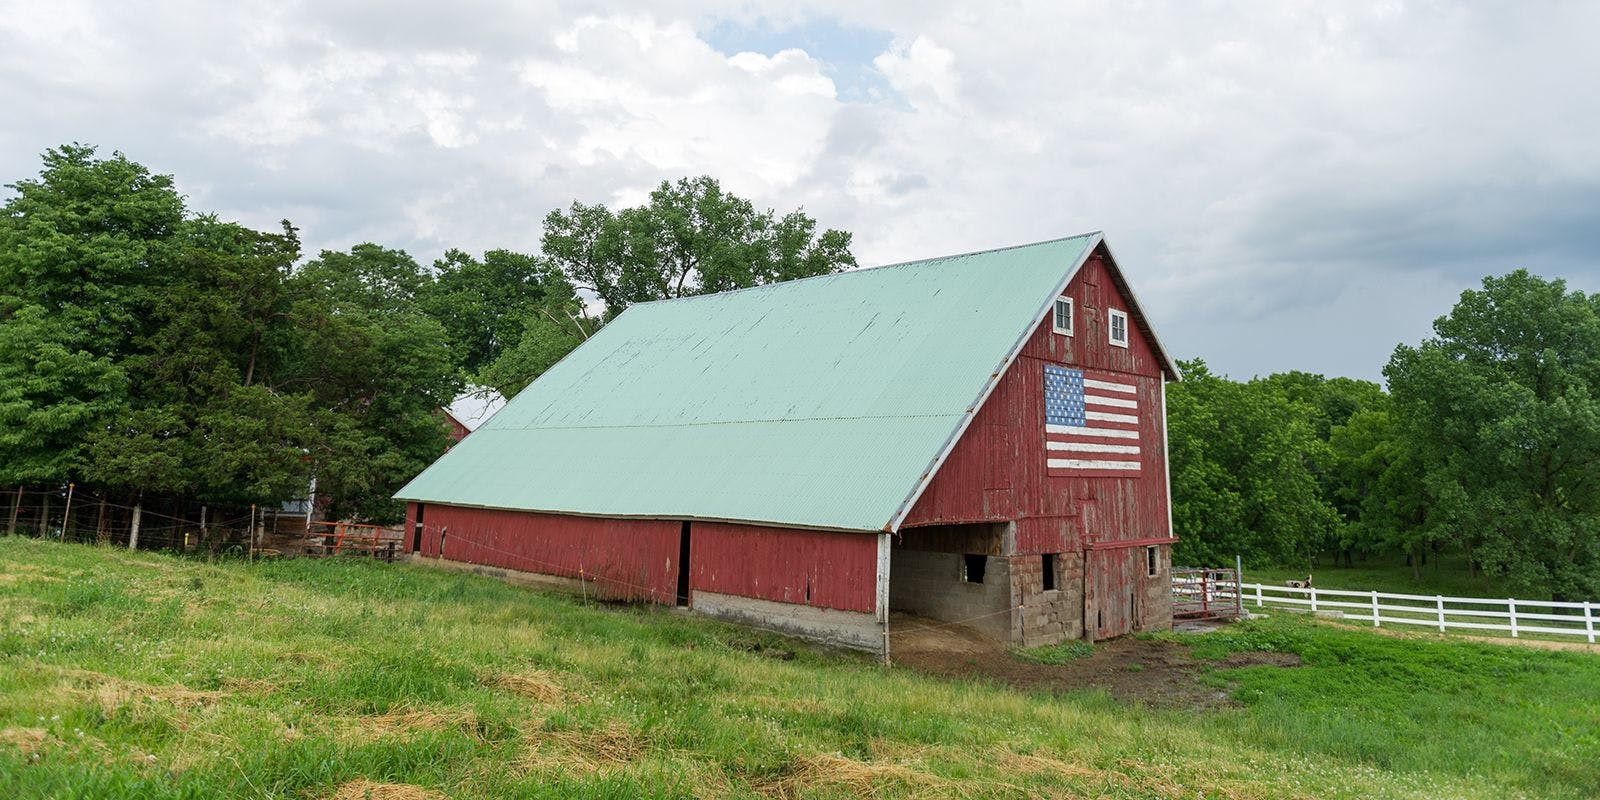 Red Patriotic Barn on the Farm